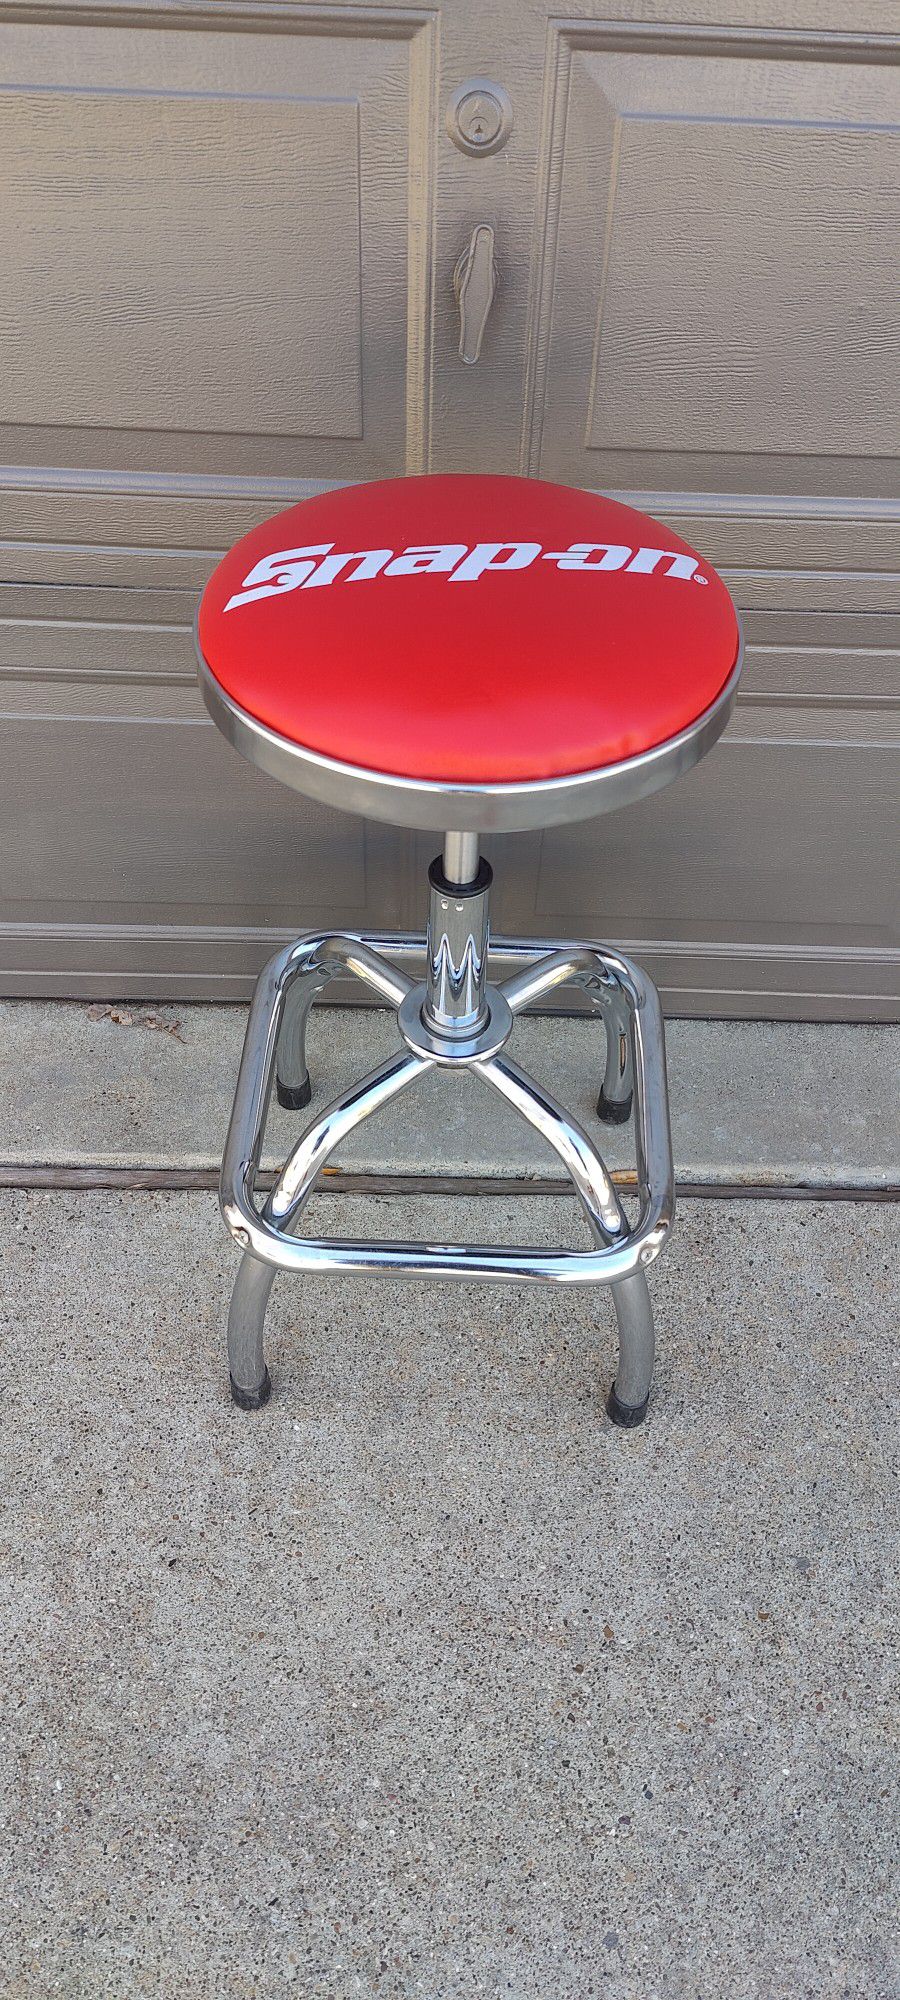 Snap-on  shop garage bar stool